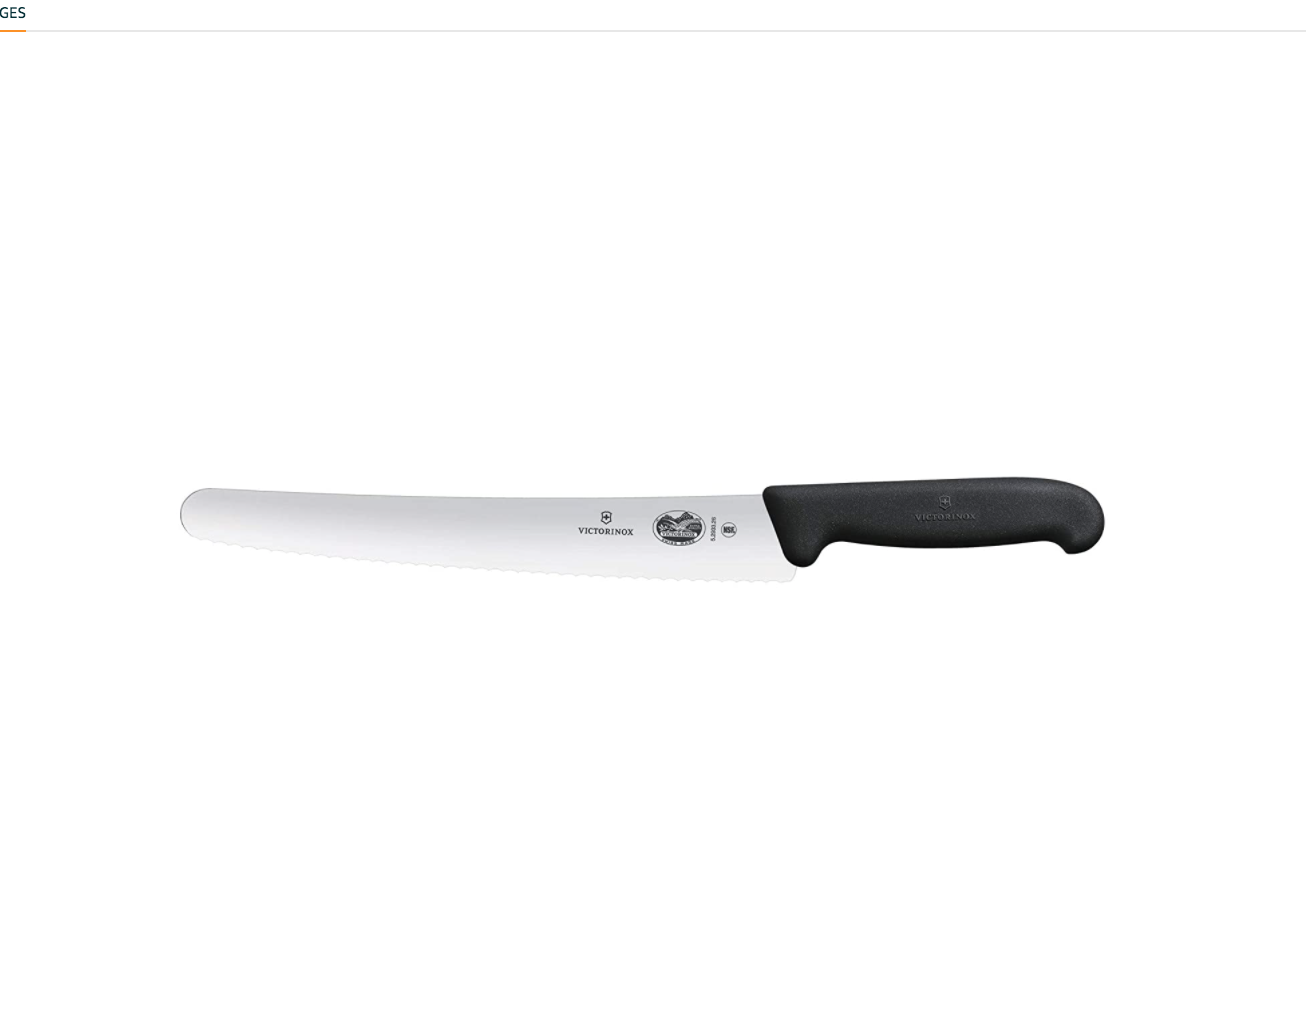 Fibrox Pro 10-inch Bread Knife